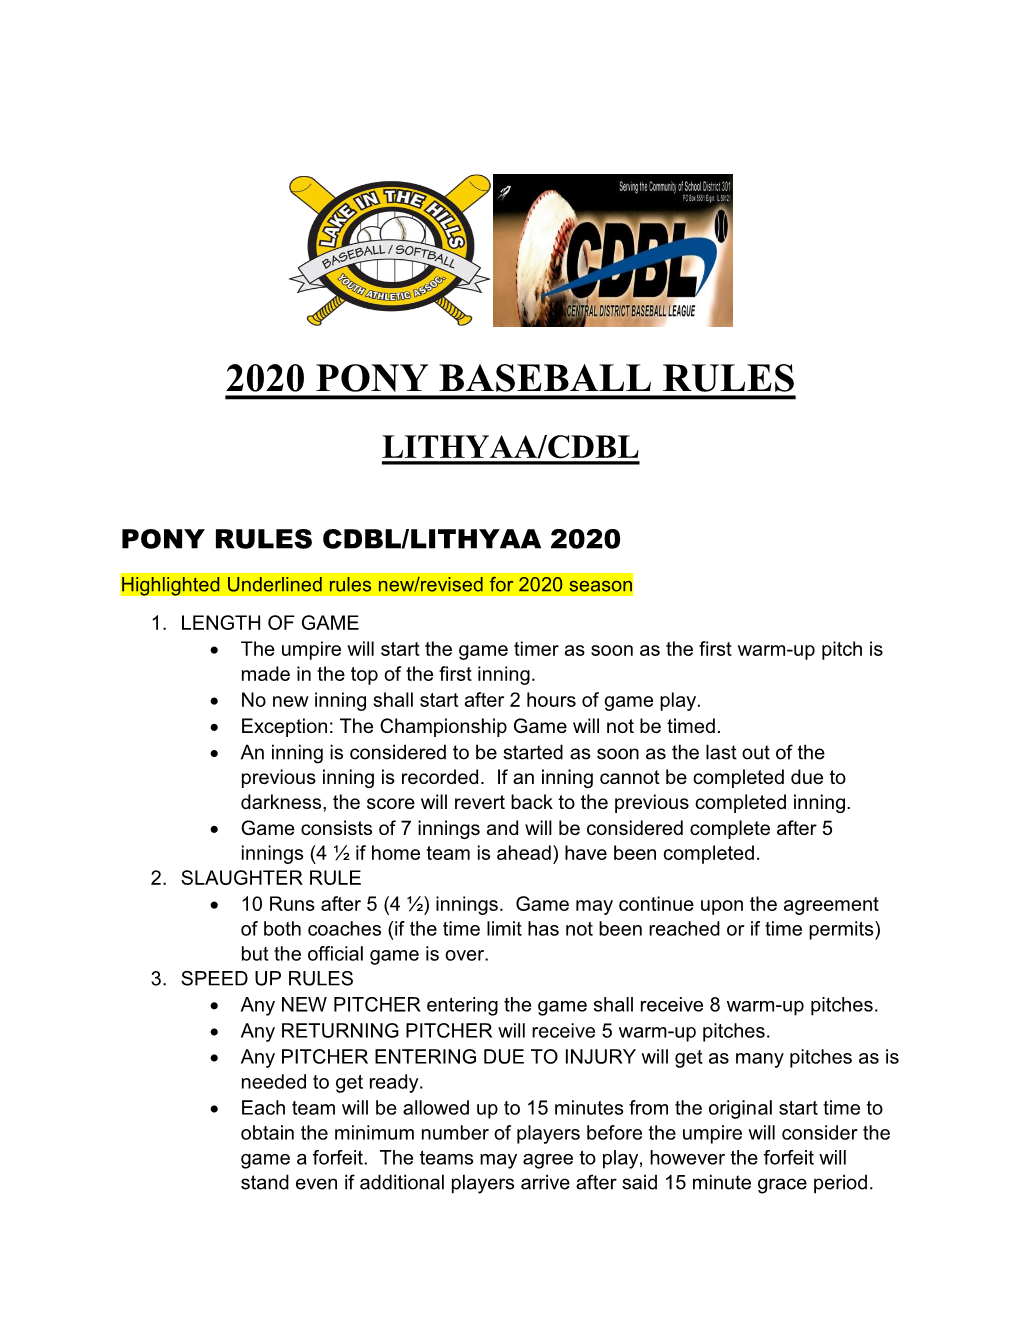 2020 Pony Baseball Rules